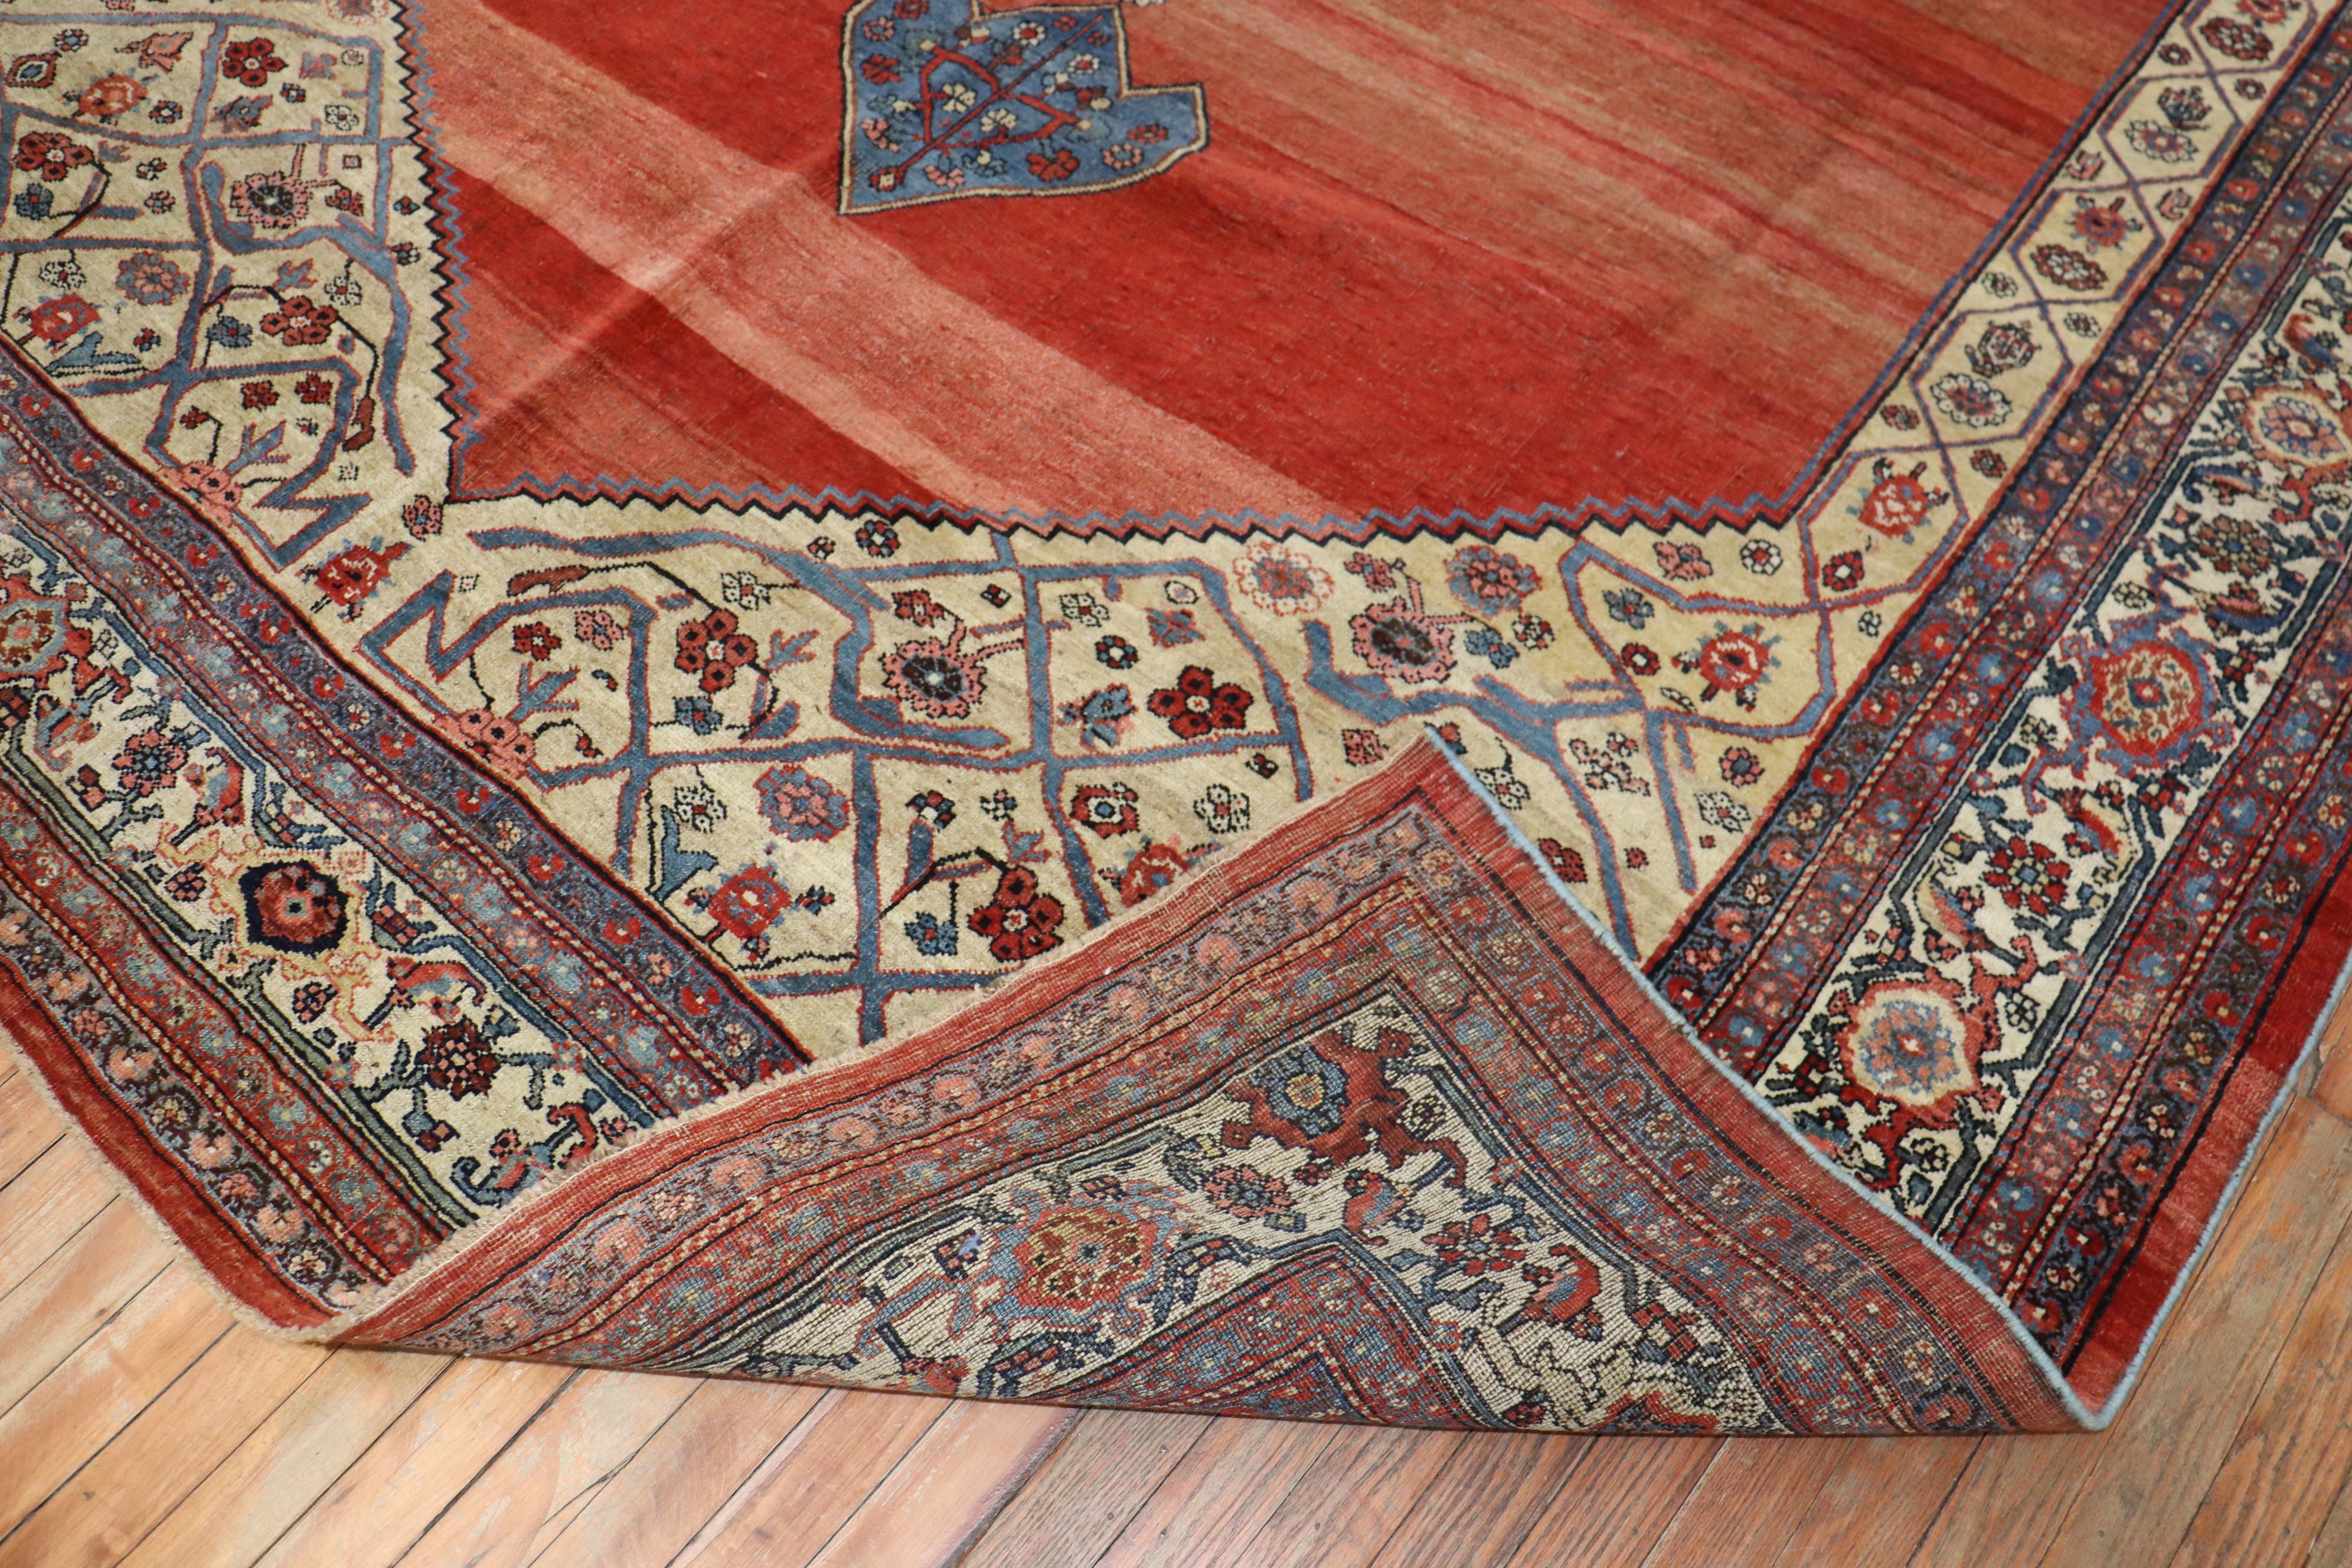 Early 20th-century Persian bidjar room-size rug

Measures: 8'3'' x 12'4''.

